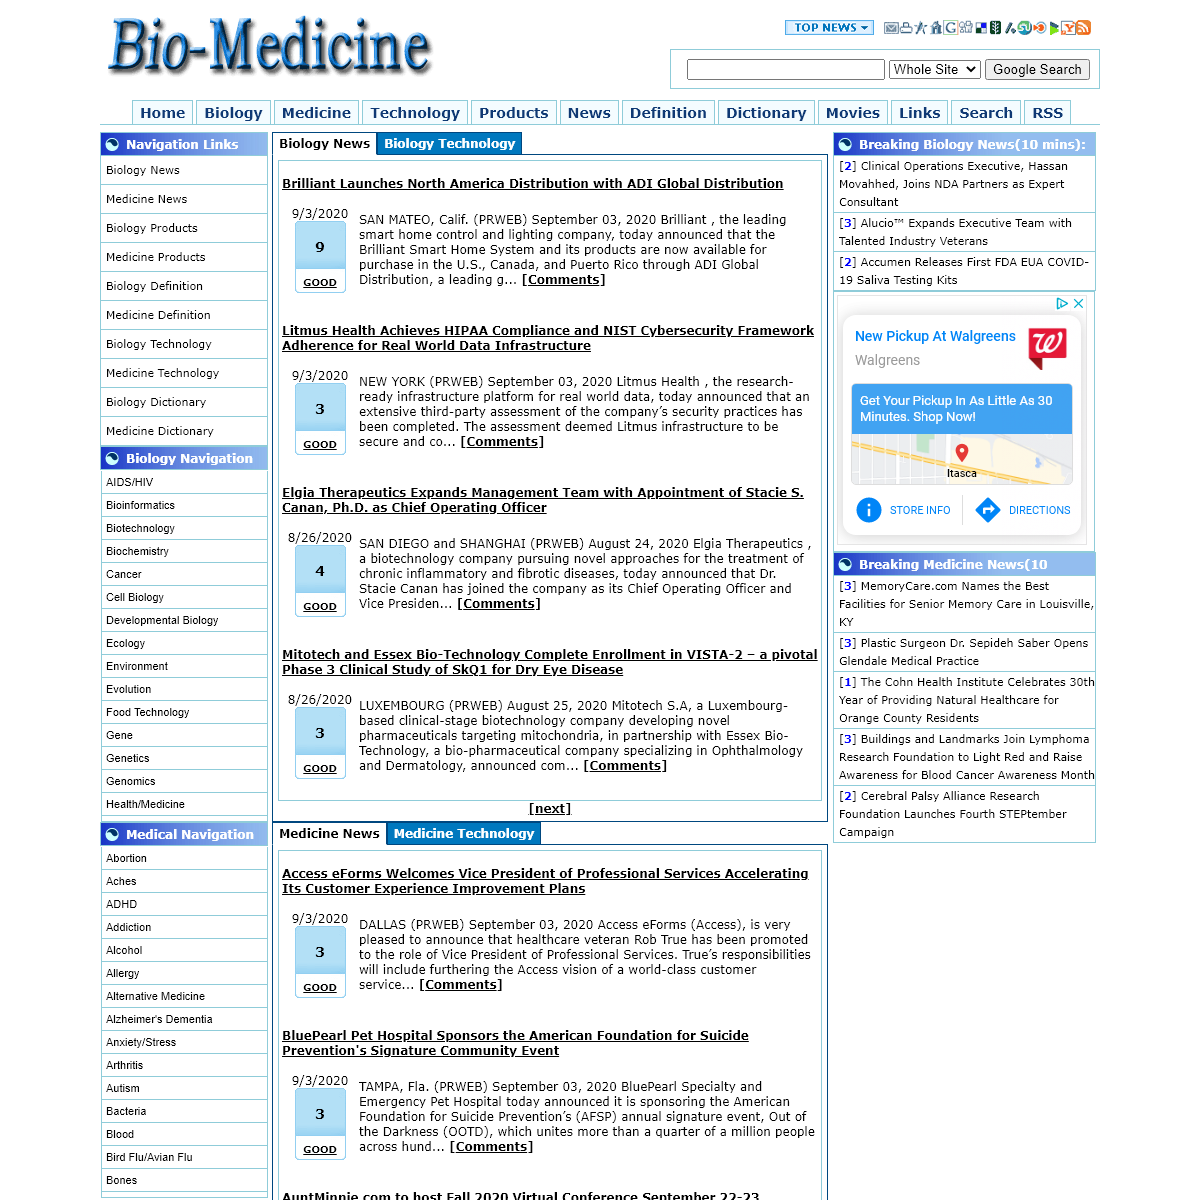 A complete backup of bio-medicine.org